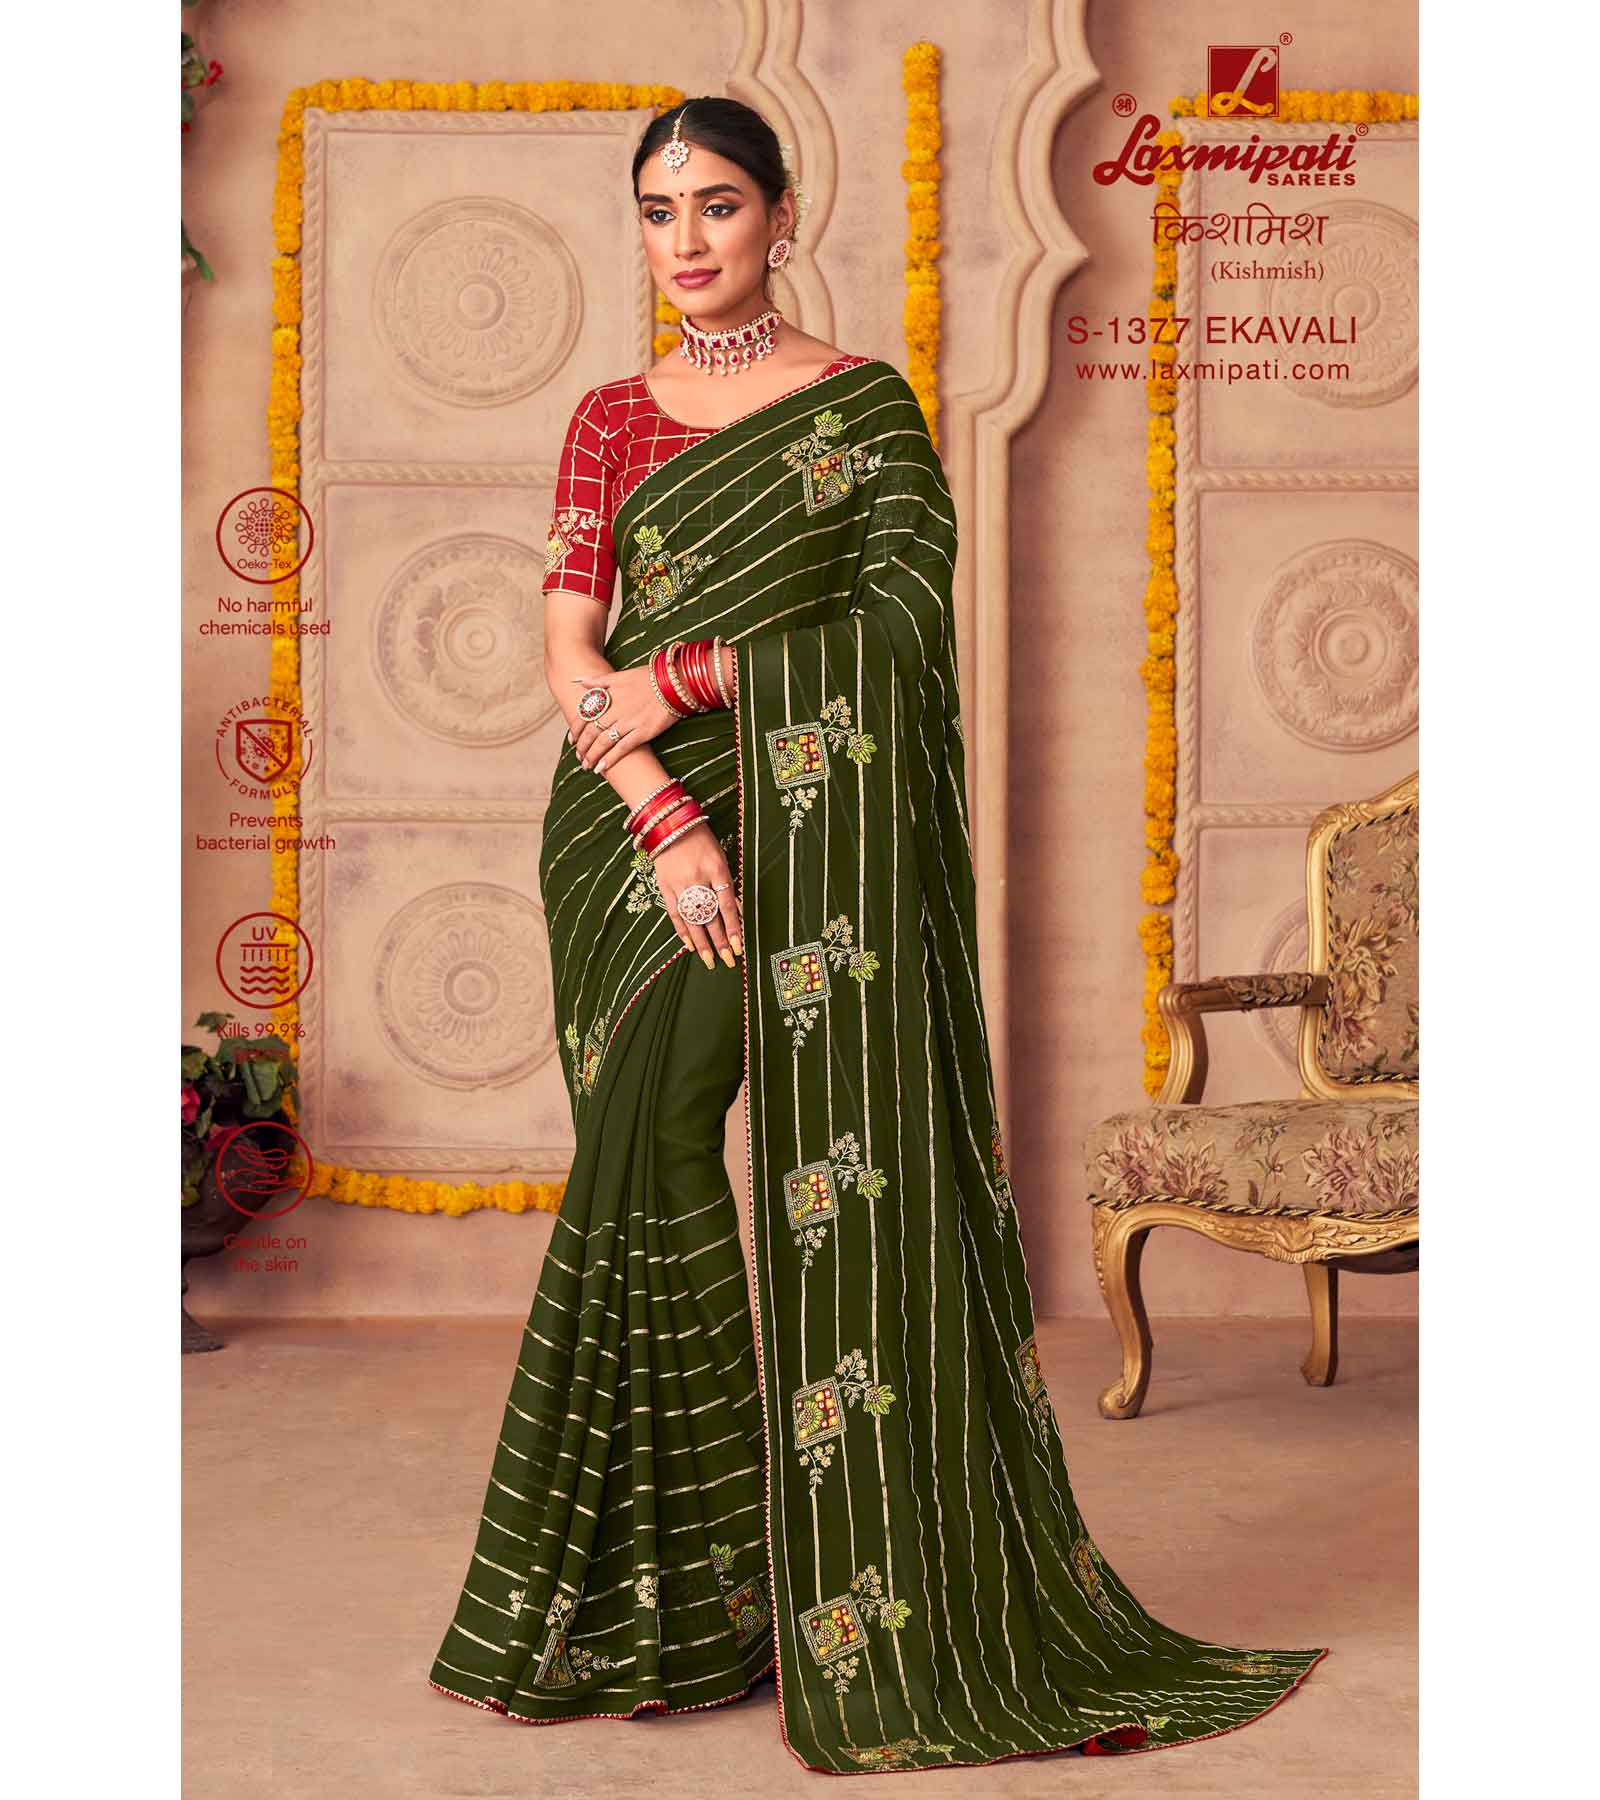 Laxmipati brand new sarees catalogue Pushpa || At wholesale price | All  india delivery | Saree, Brand new, Catalog